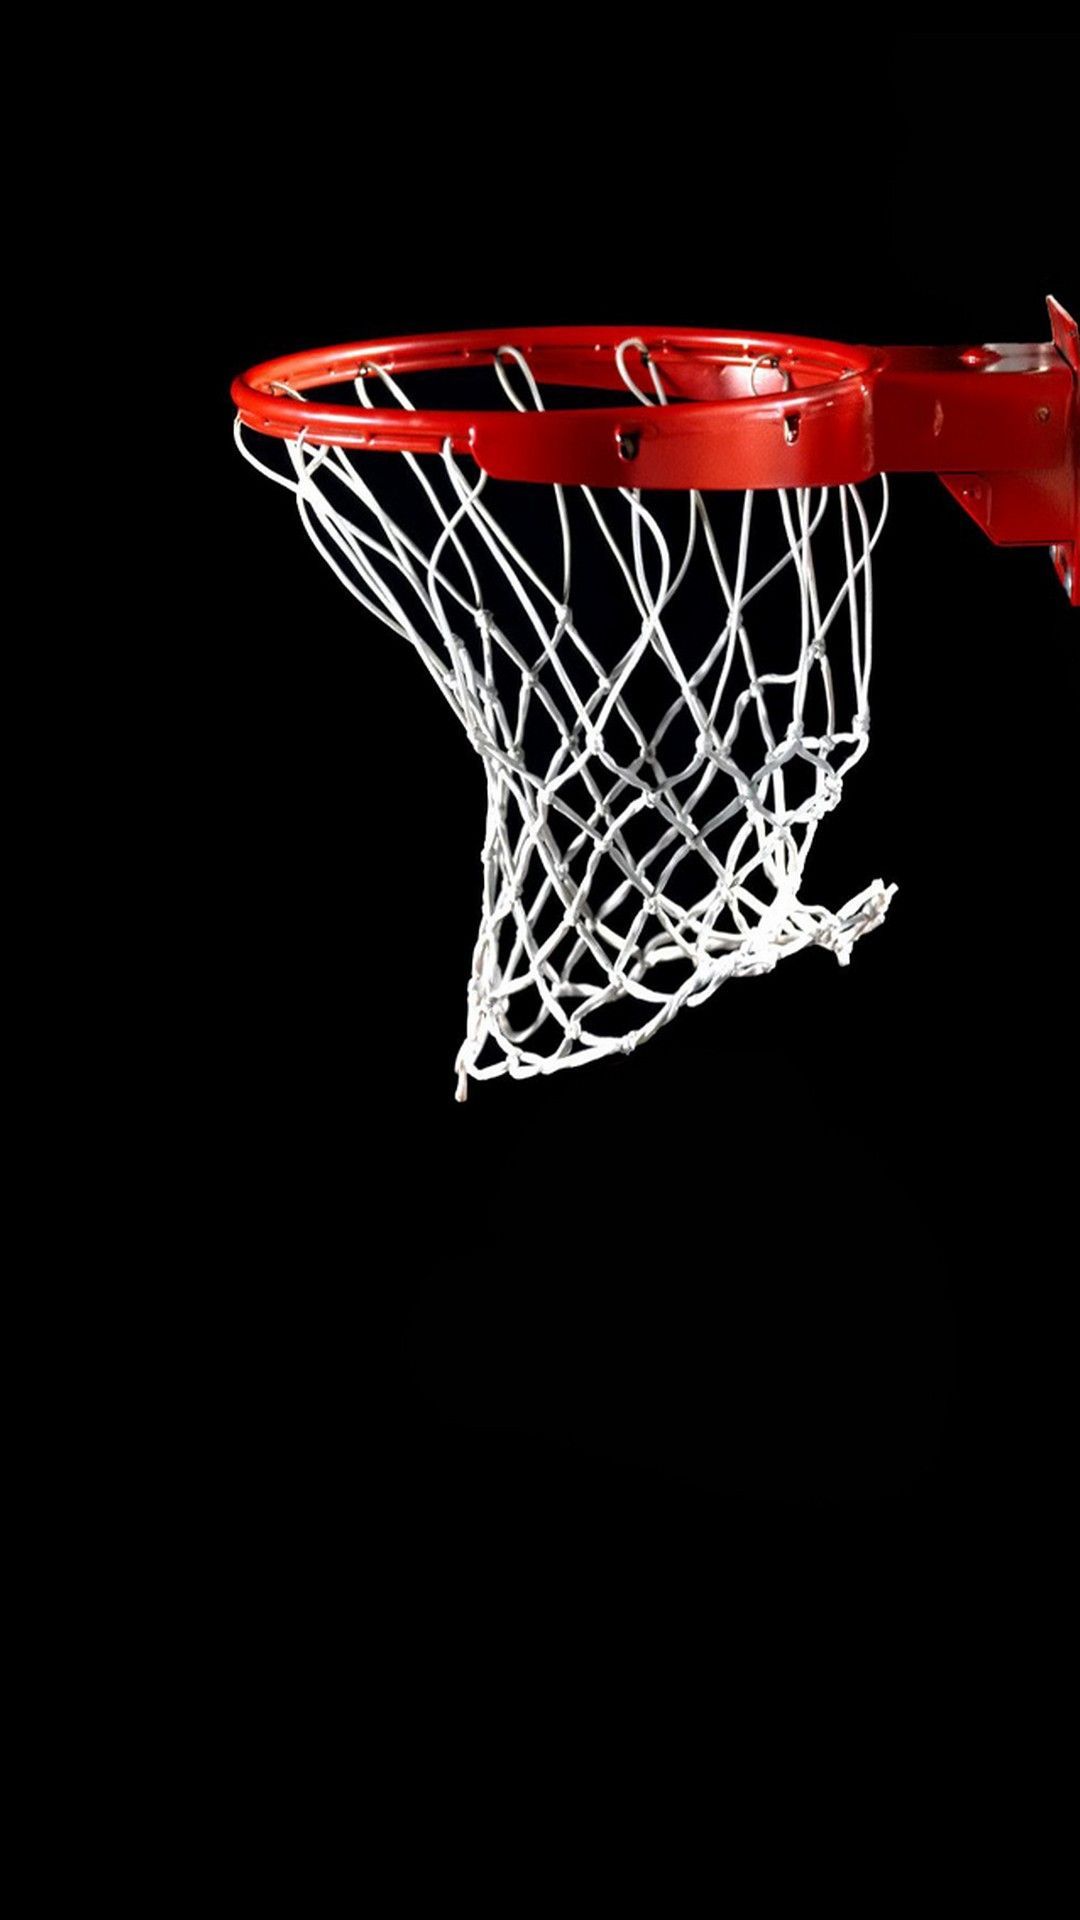 Free Download NBA HD Wallpaper For Mobile Nba Basketball Hoop Basketball [1080x1920] For Your Desktop, Mobile & Tablet. Explore NBA Phone 2020 Wallpaper. NBA Phone 2020 Wallpaper, NBA All Star